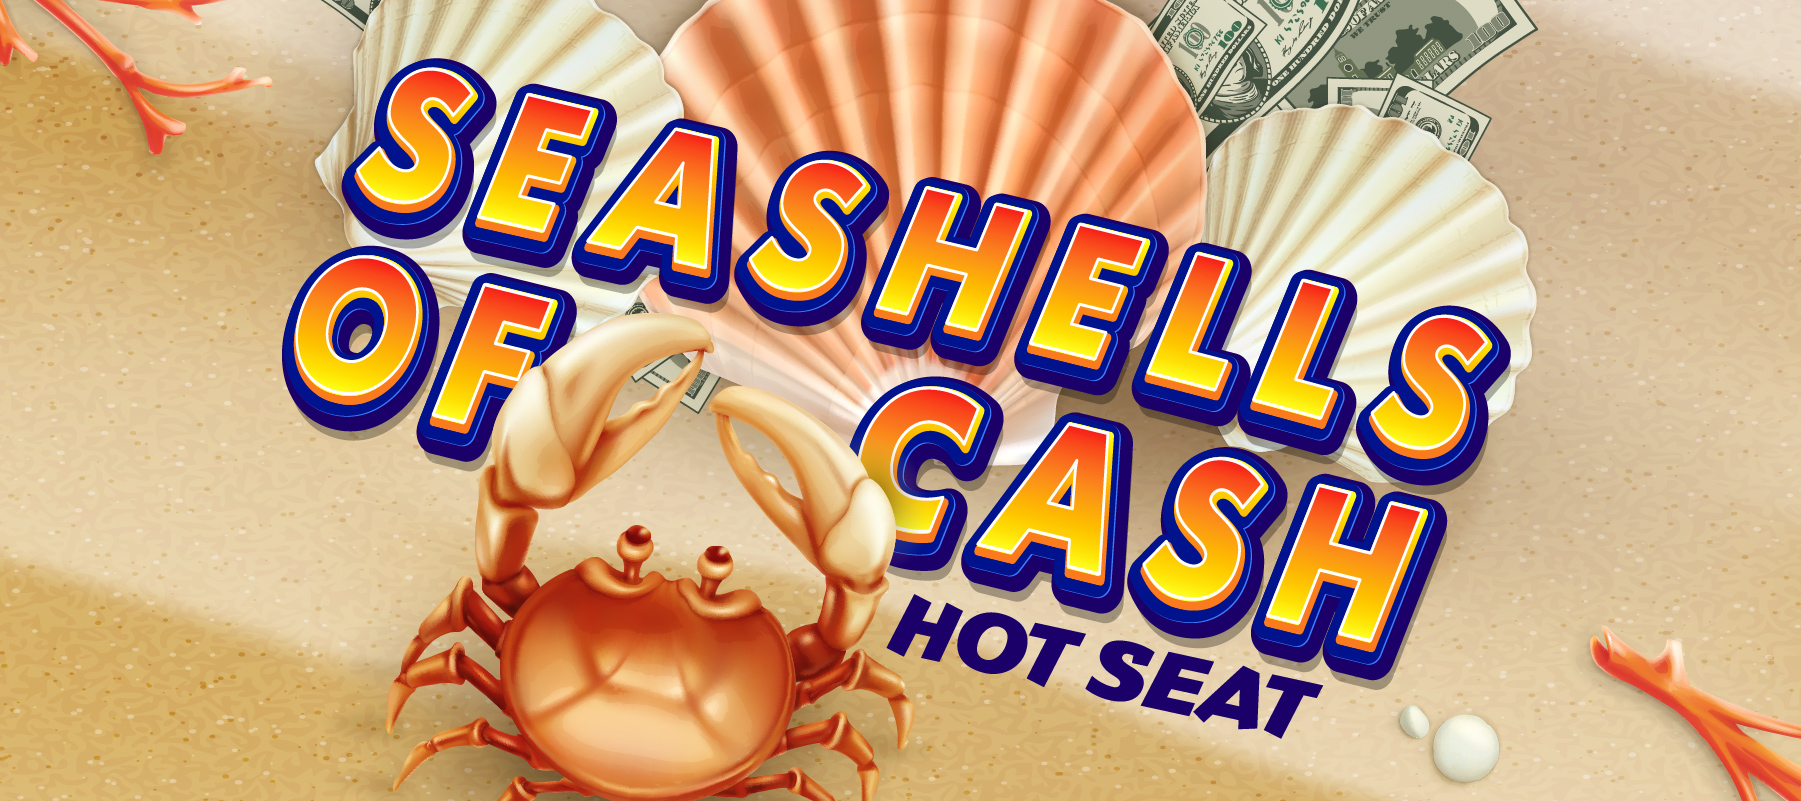 seashells of cash